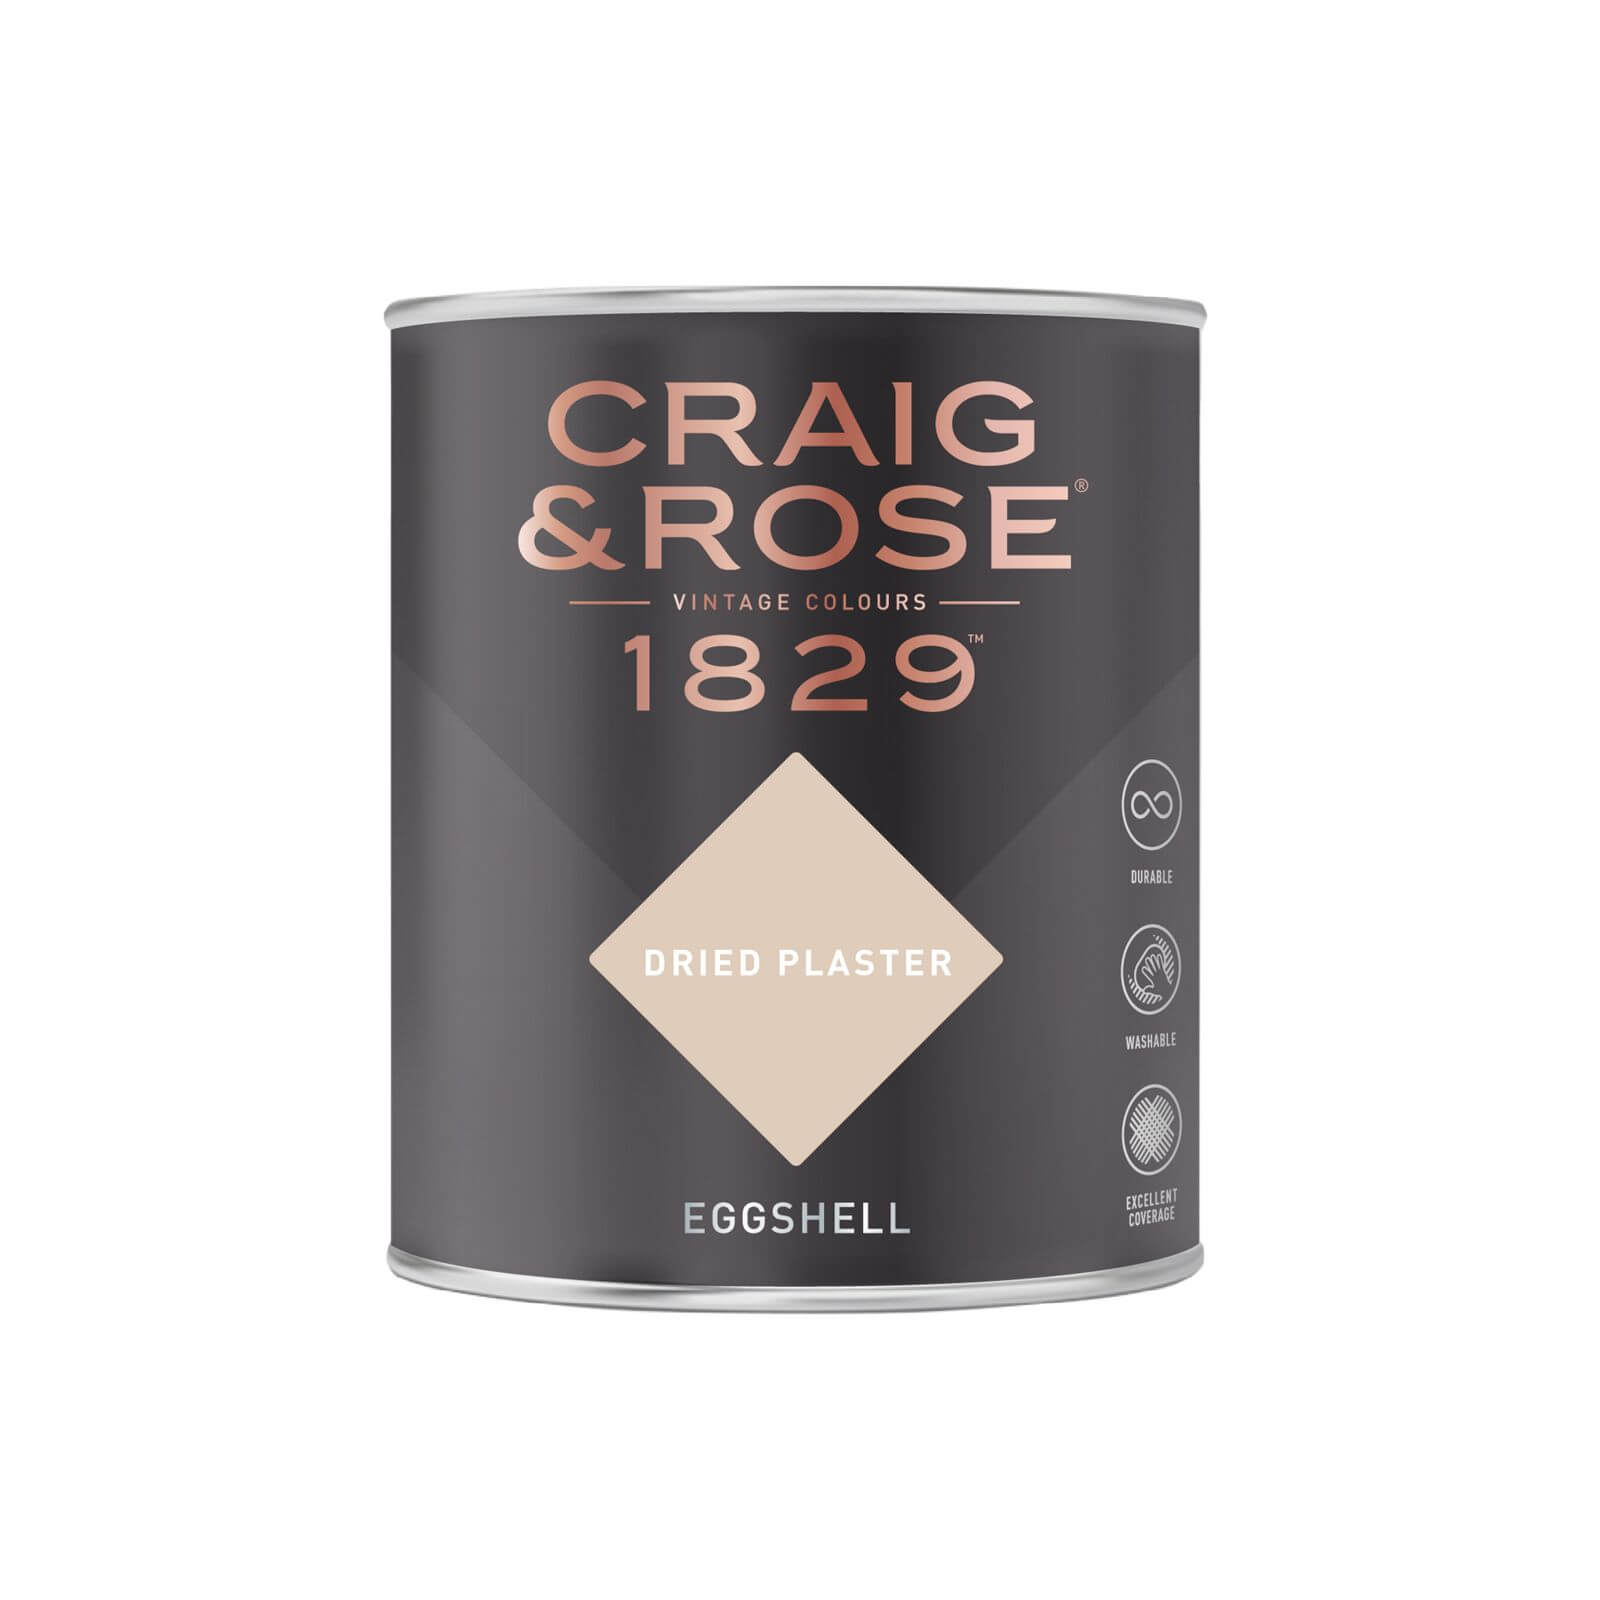 Craig & Rose 1829 Eggshell Paint Dried Plaster - 750ml